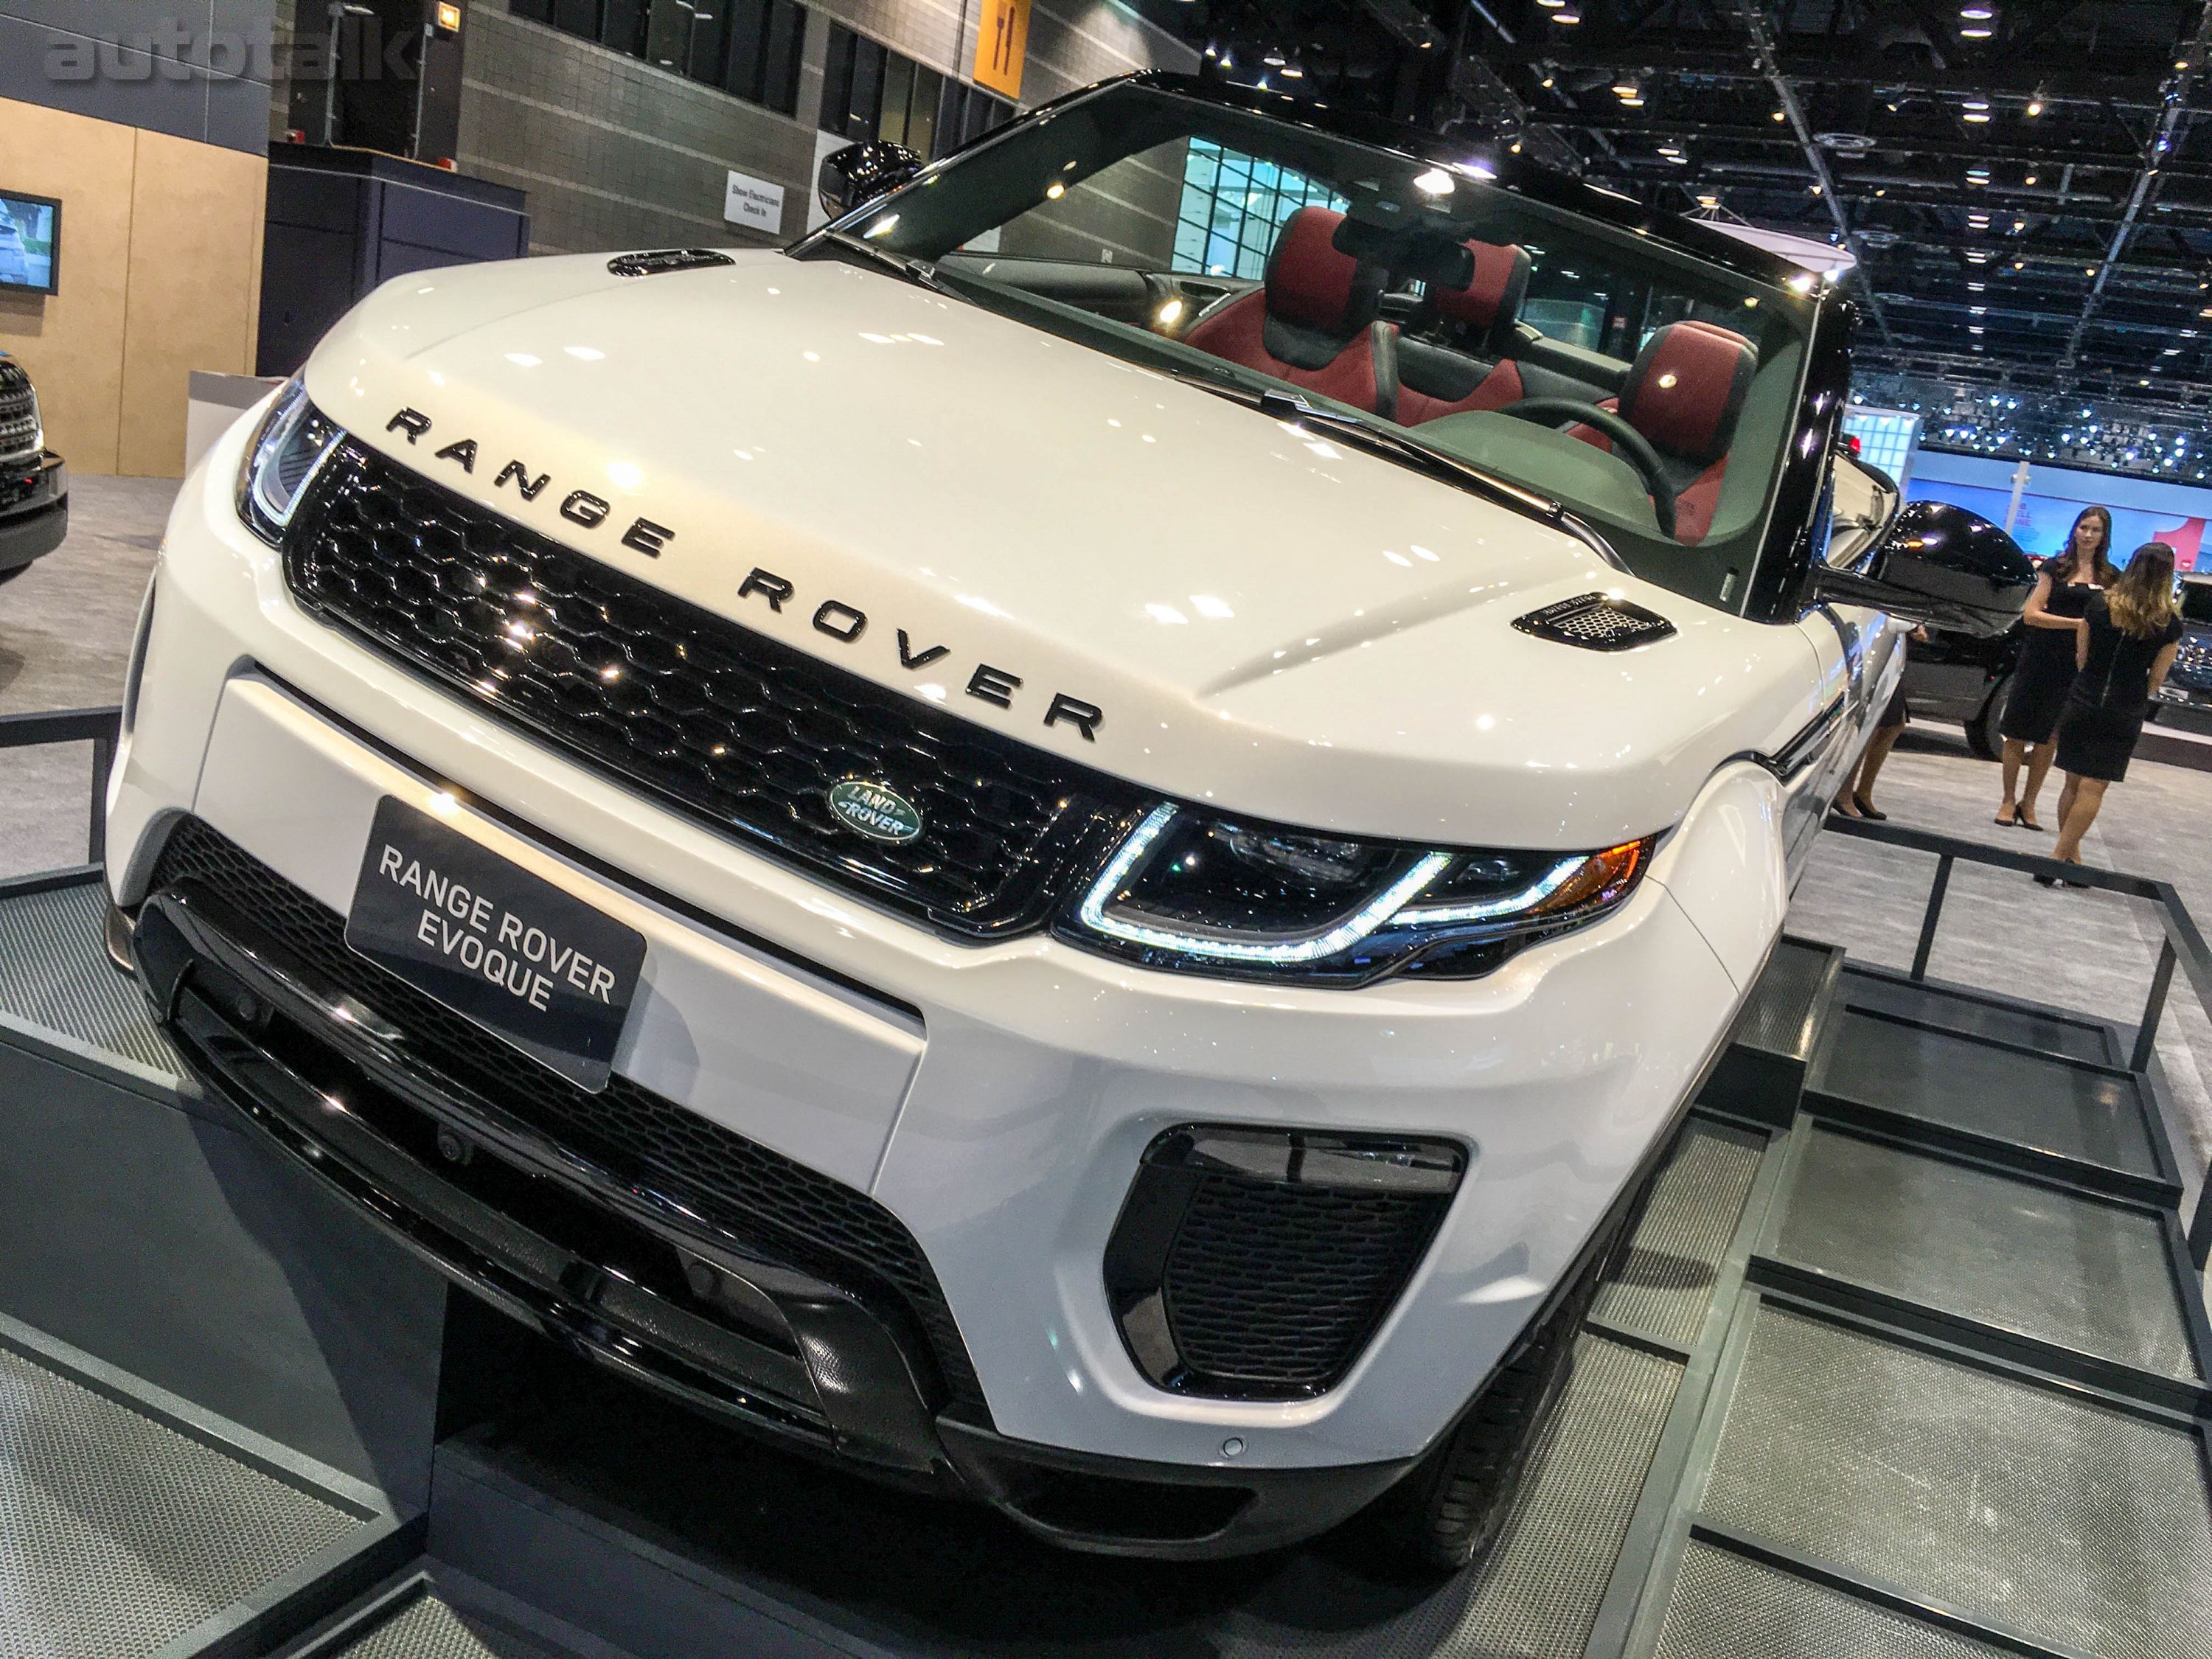 Range Rover at 2016 Chicago Auto Show